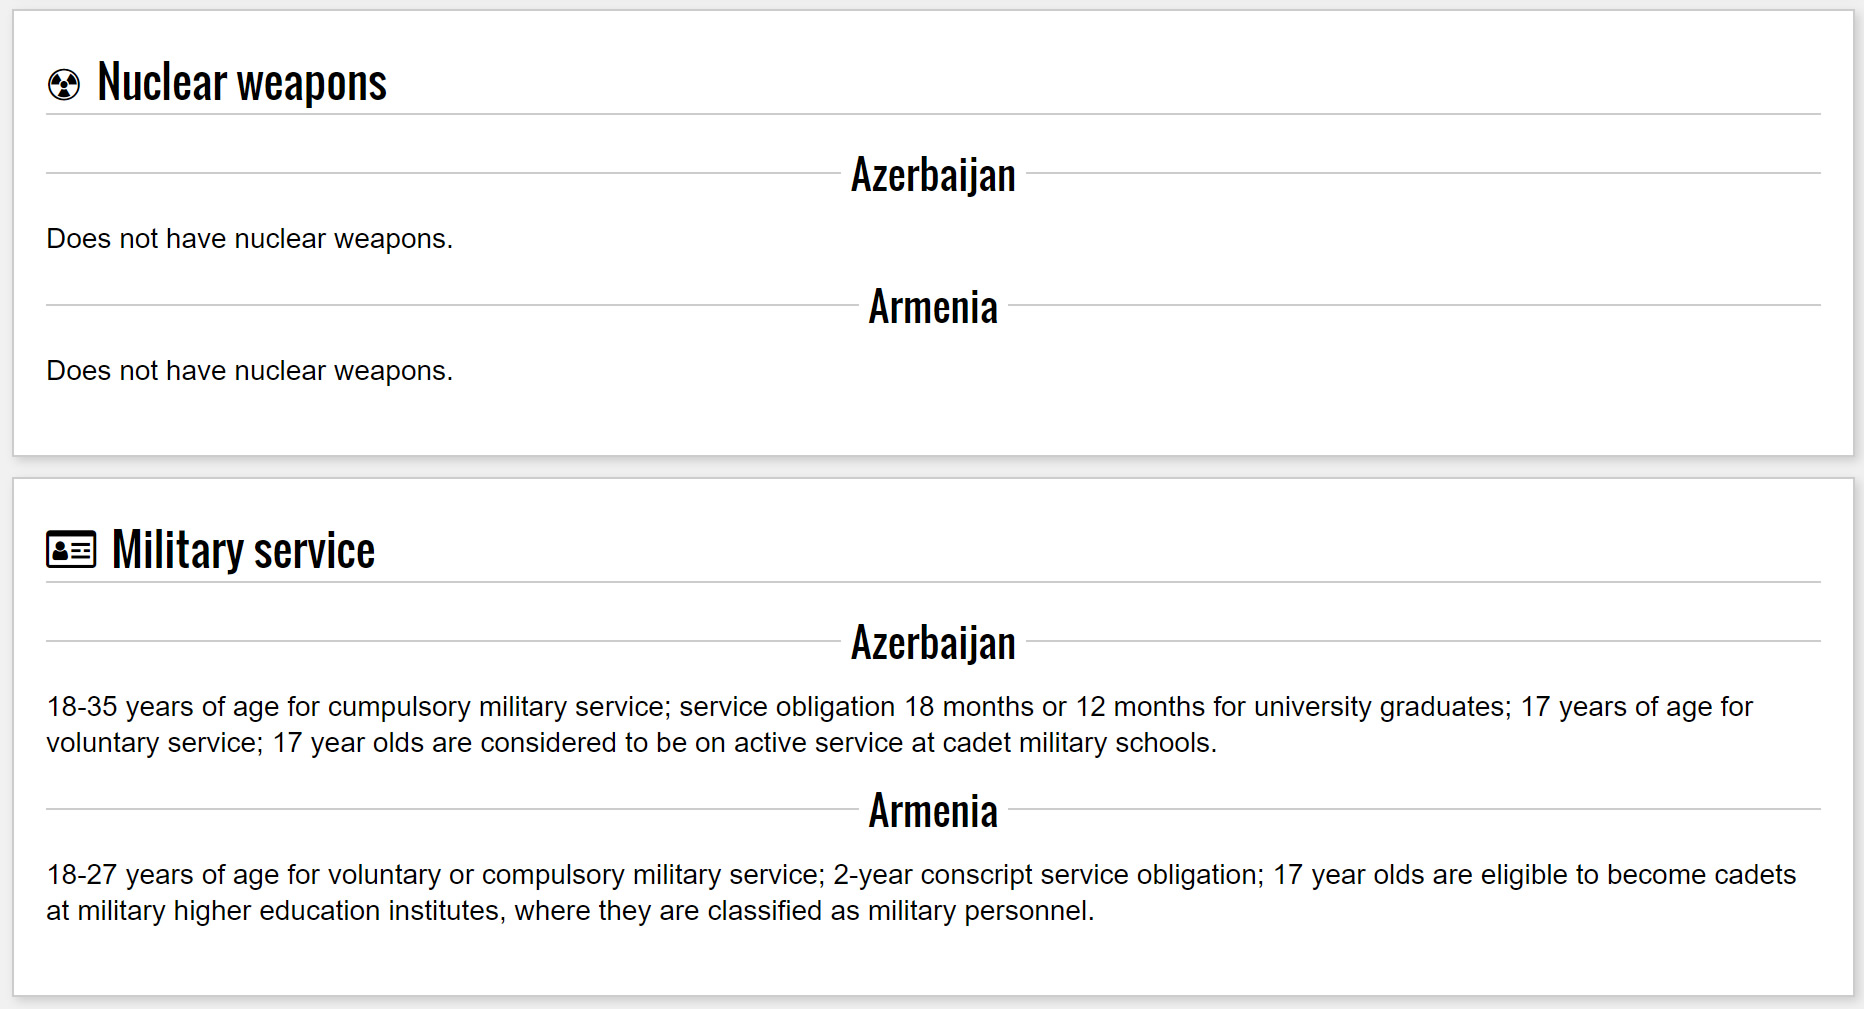 Armenia vs Azerbaijan Nuclear Weapons & Military Service